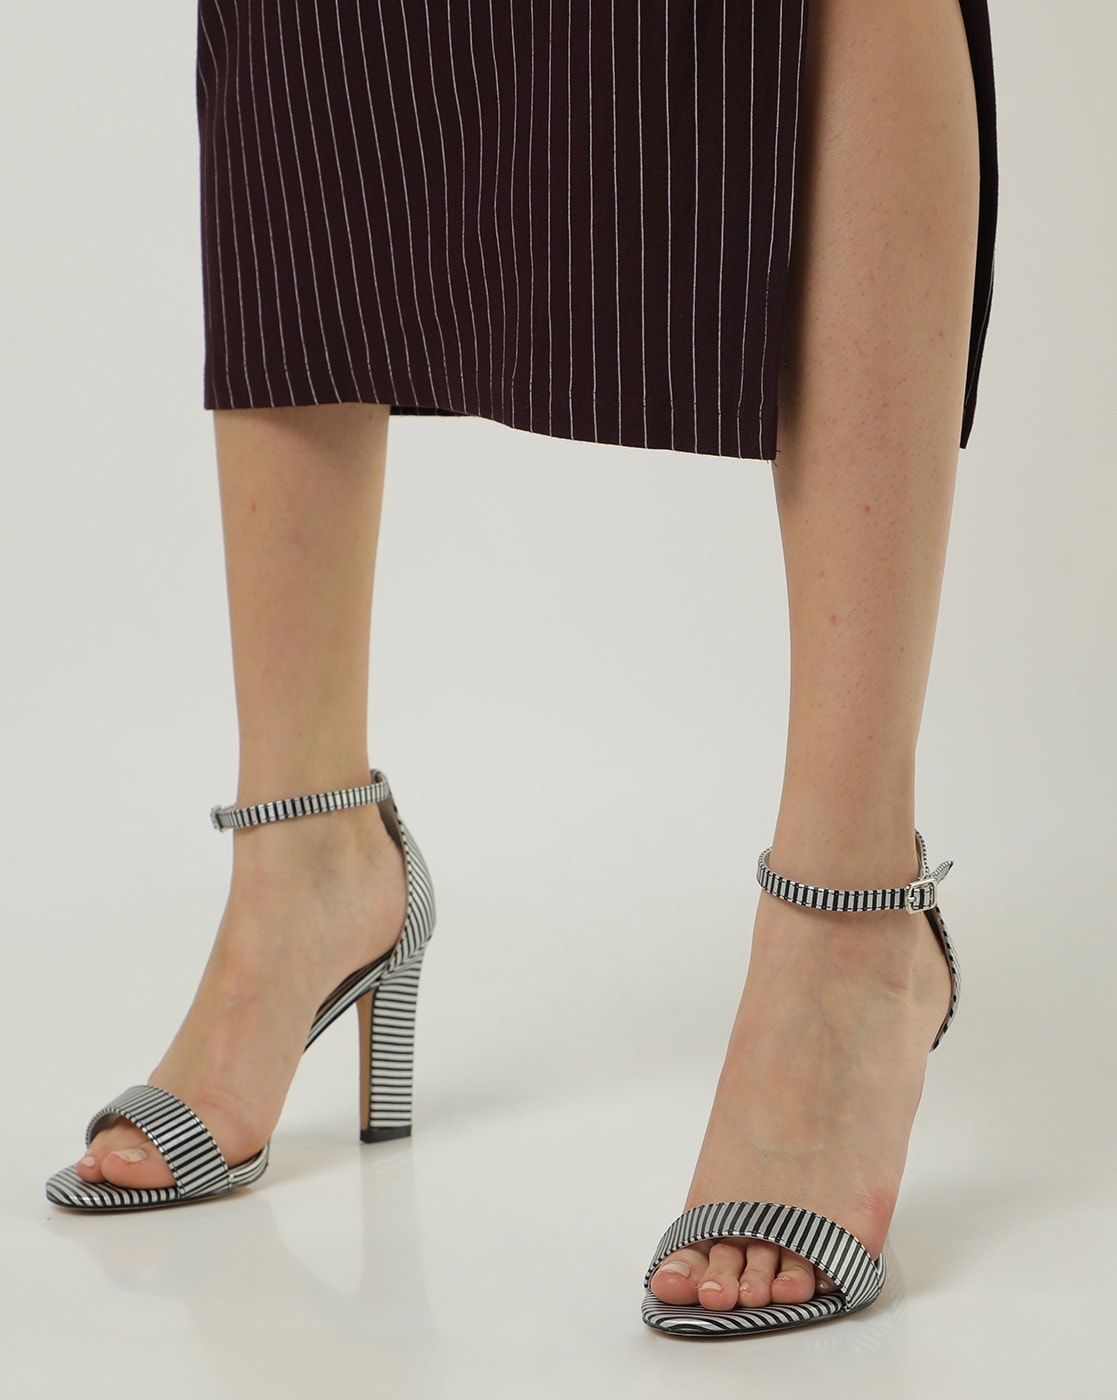 Pointed Toe Satin Sandals High Heels Fashion Bow Diamond Stiletto High Heels  | eBay